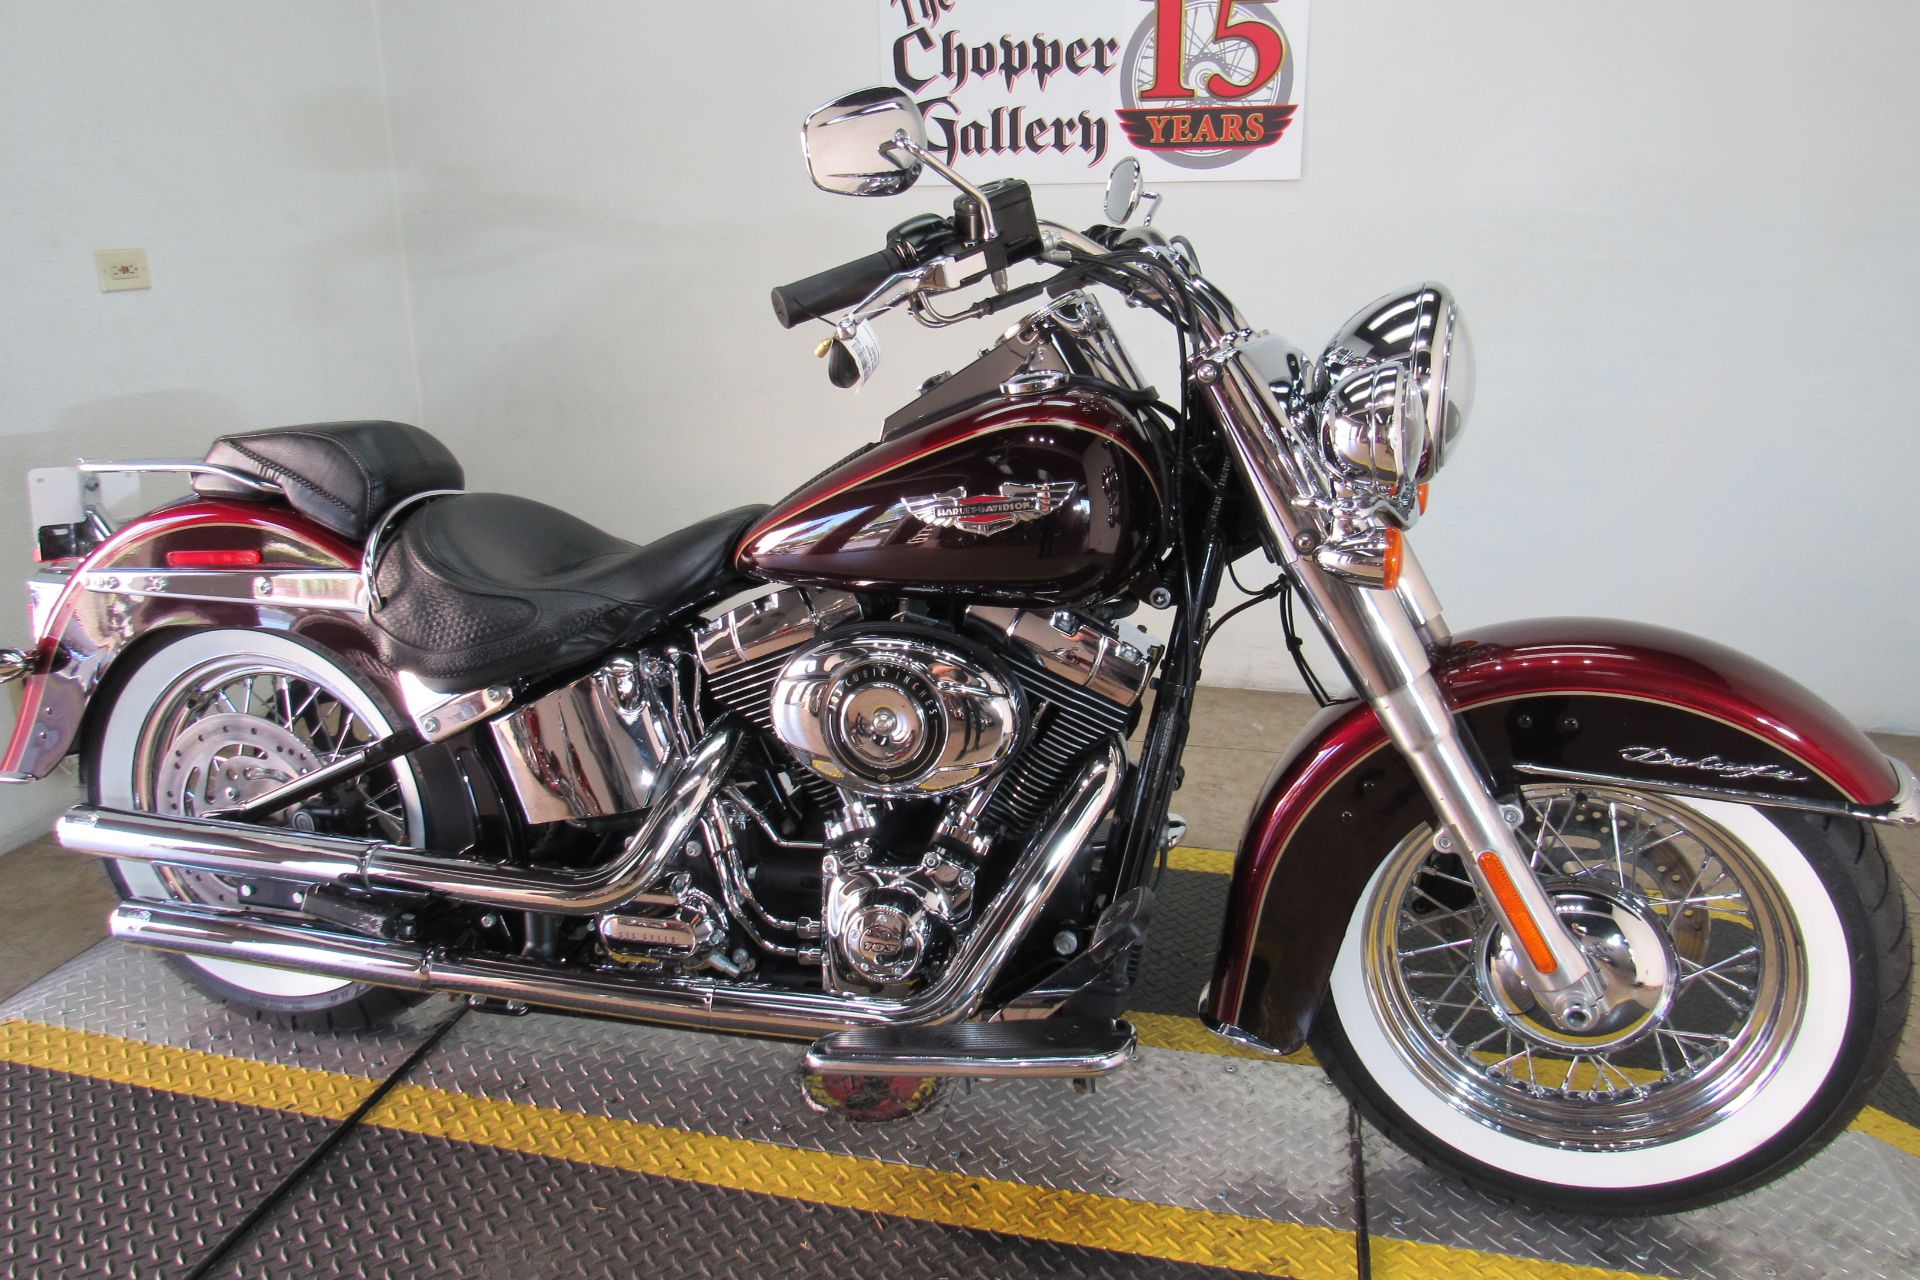 2014 Harley-Davidson Softail® Deluxe in Temecula, California - Photo 3